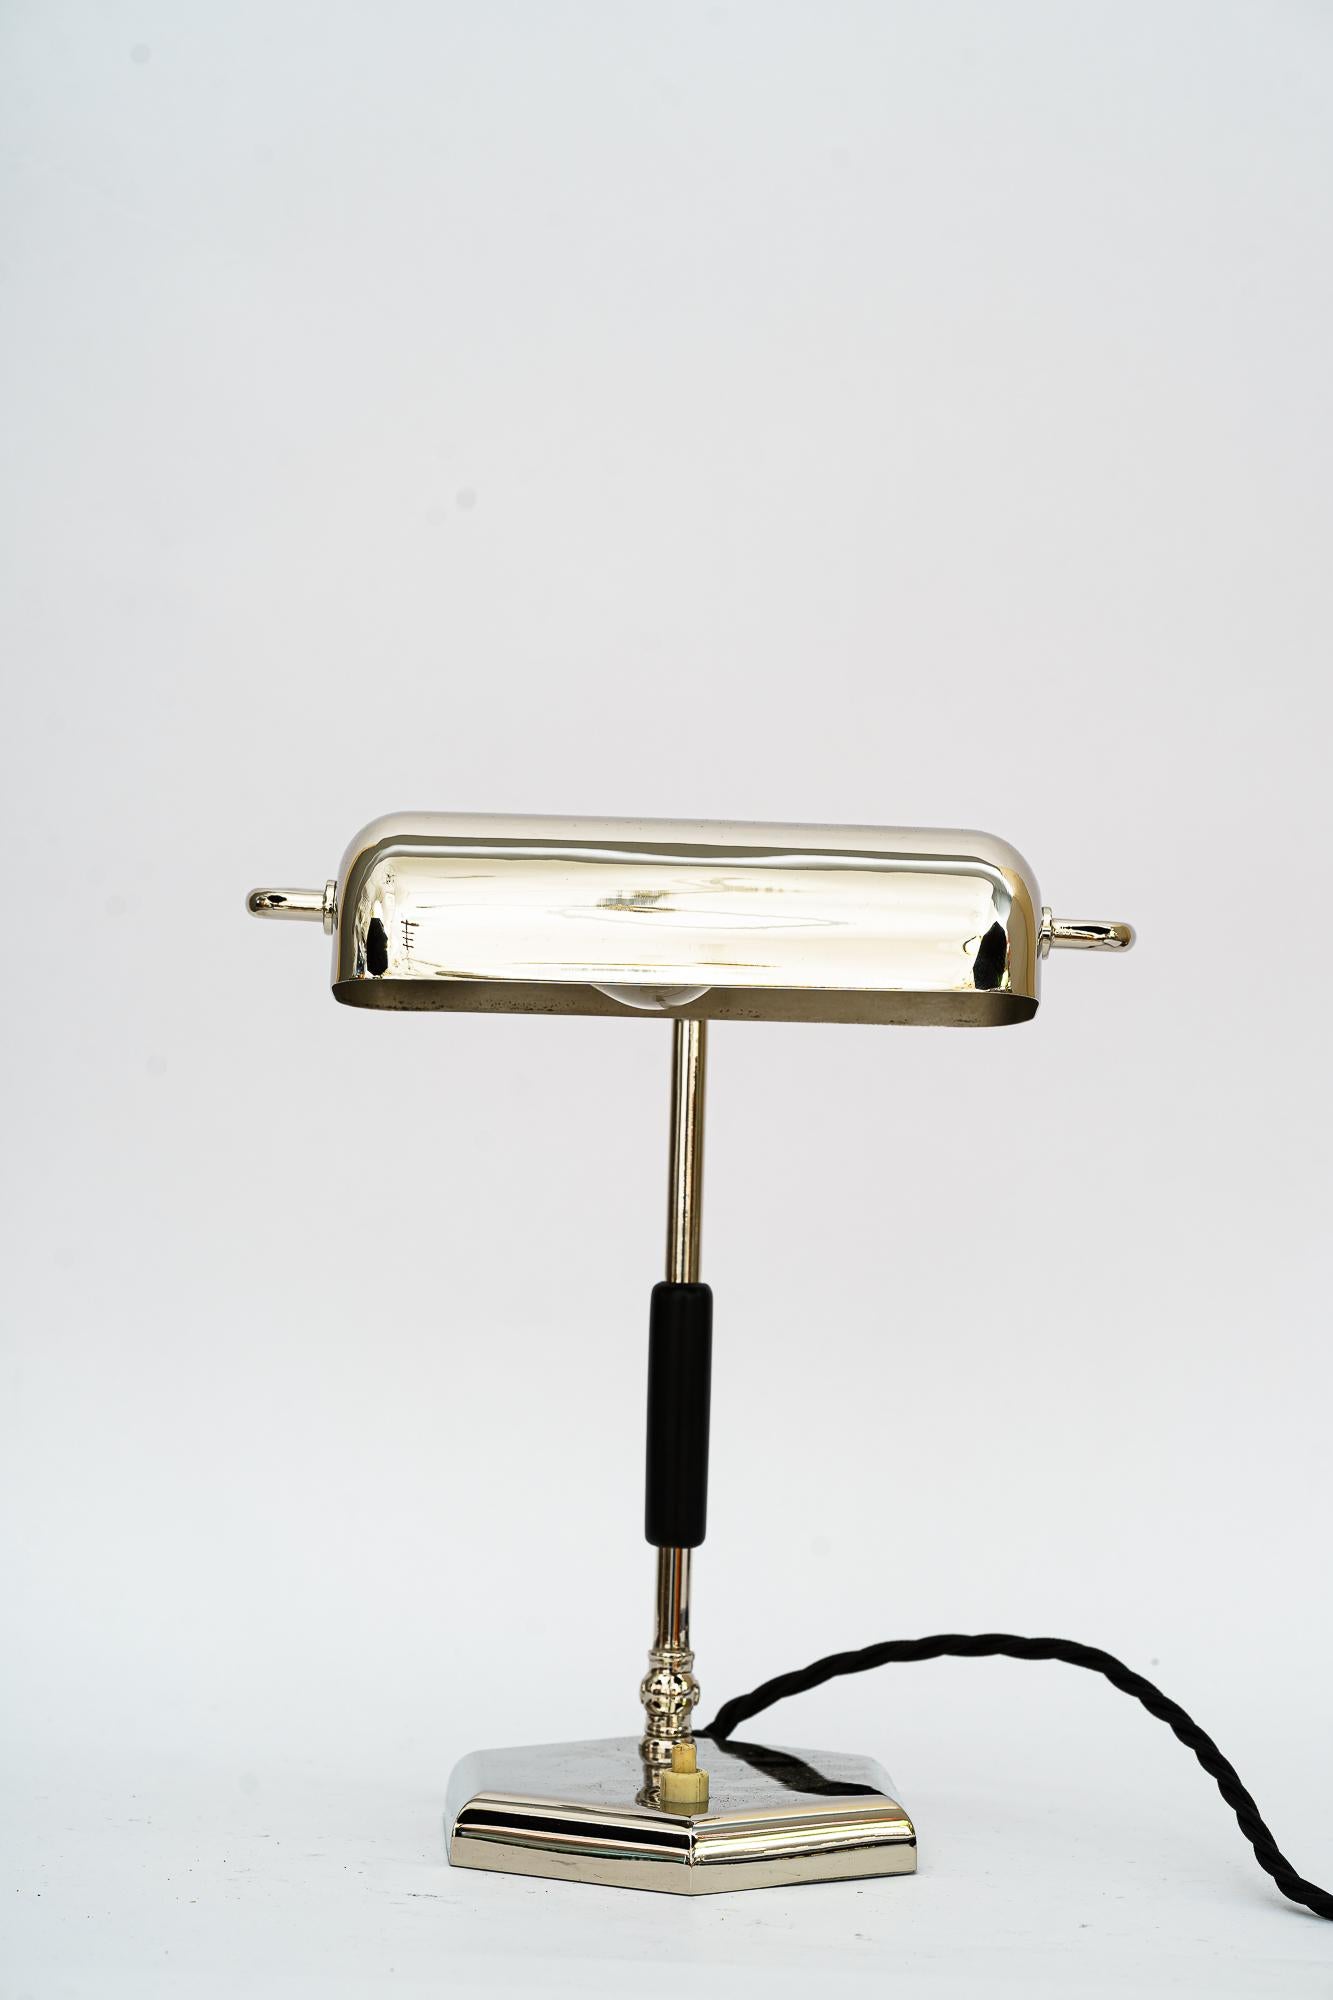 Swiveling Art Deco nickel table lamp vienna around 1920s
Nickel-plated
Wood handle ( blackened ).